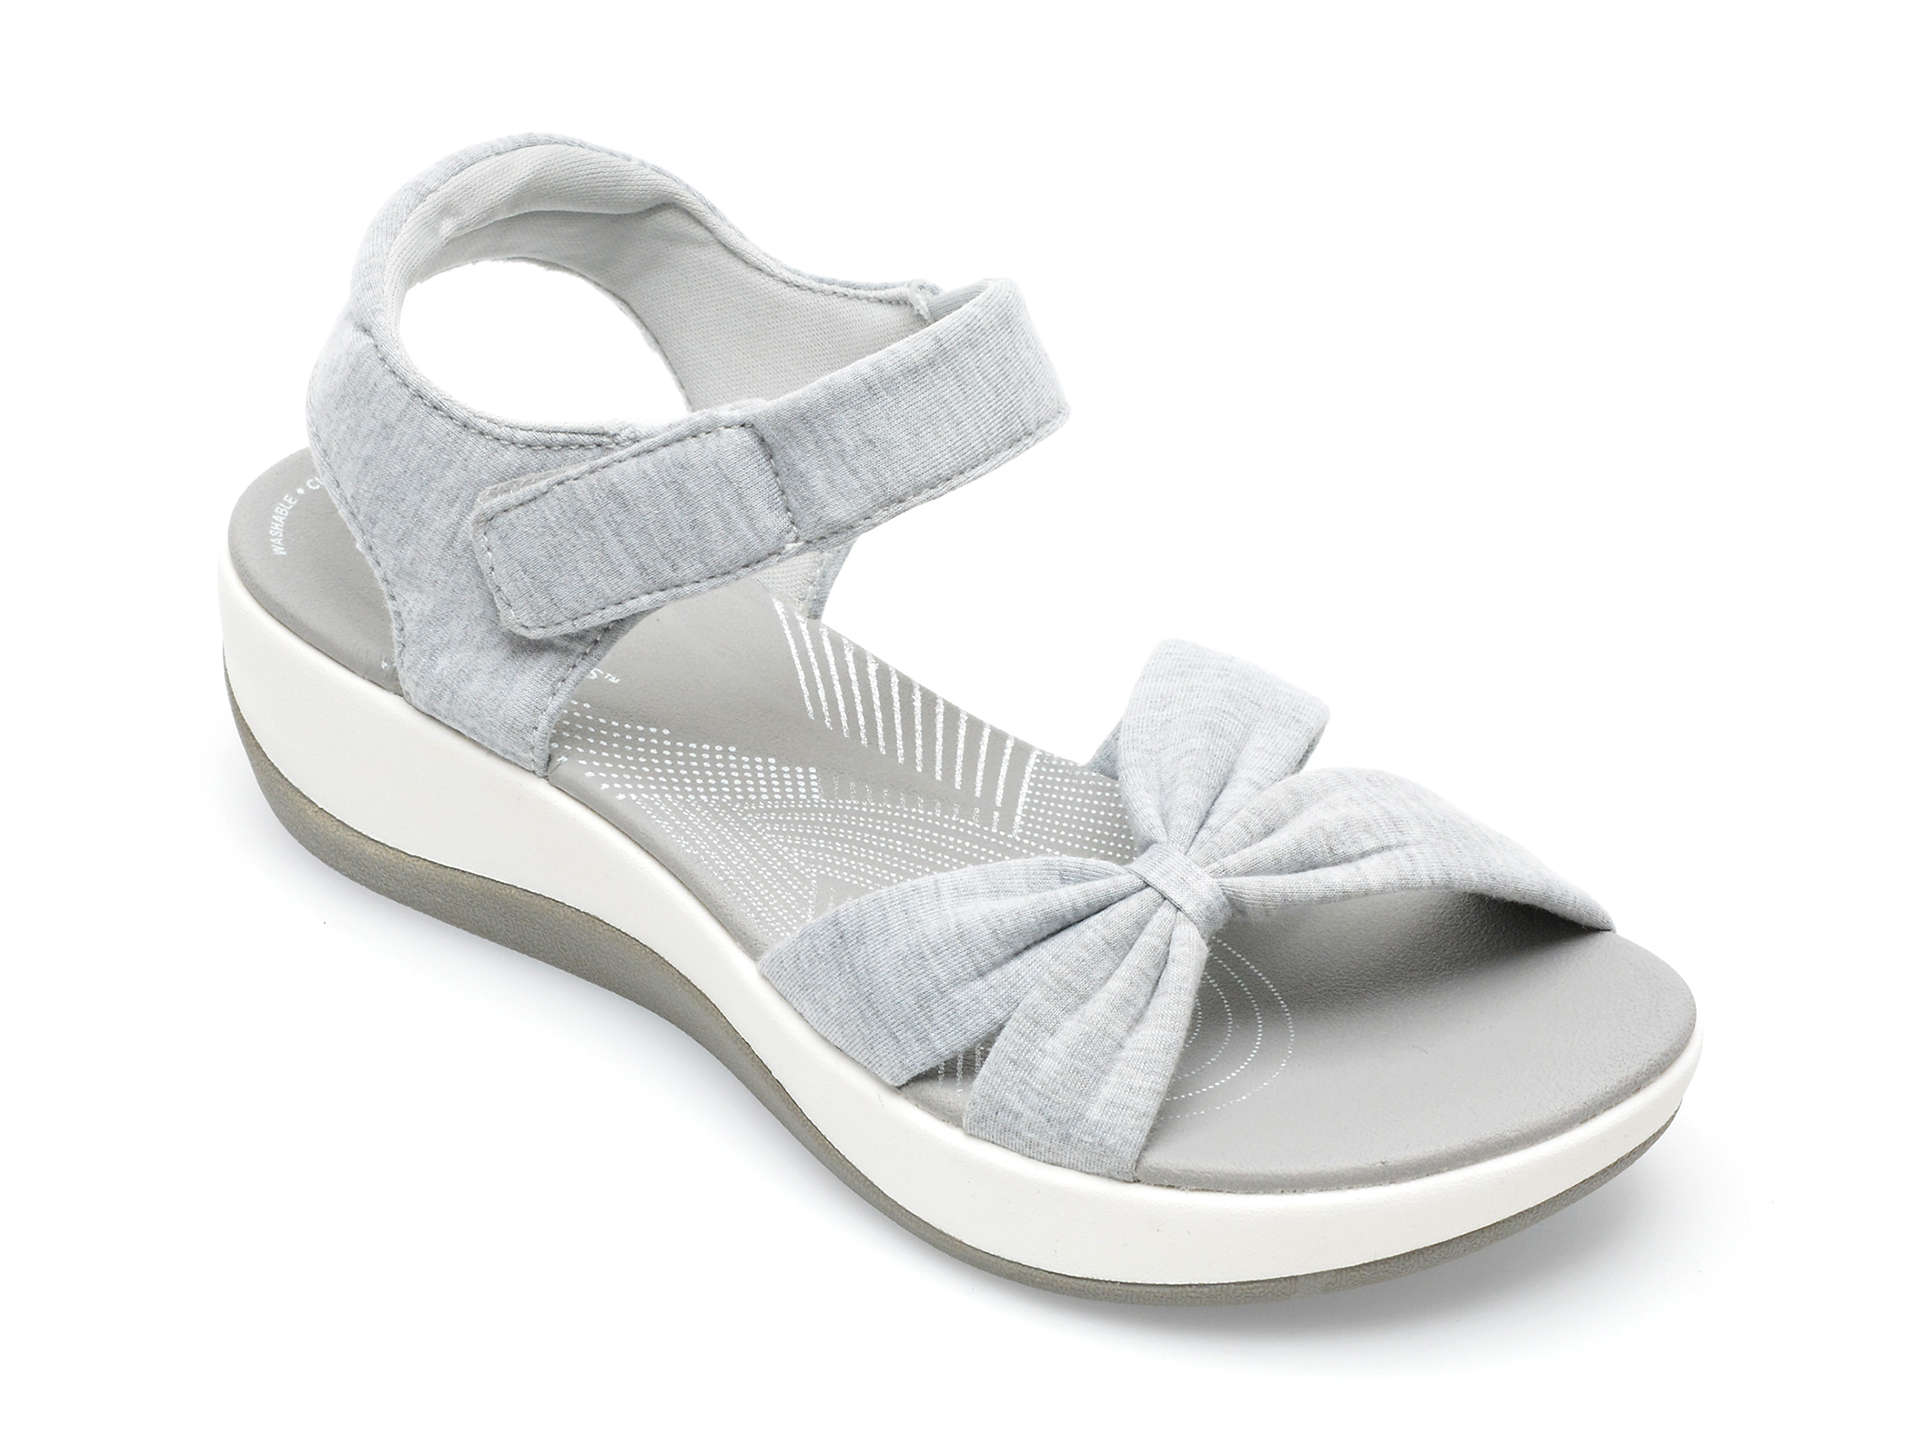 Sandale CLARKS gri, ARLA SHORE 0912, din material textil femei 2023-03-21